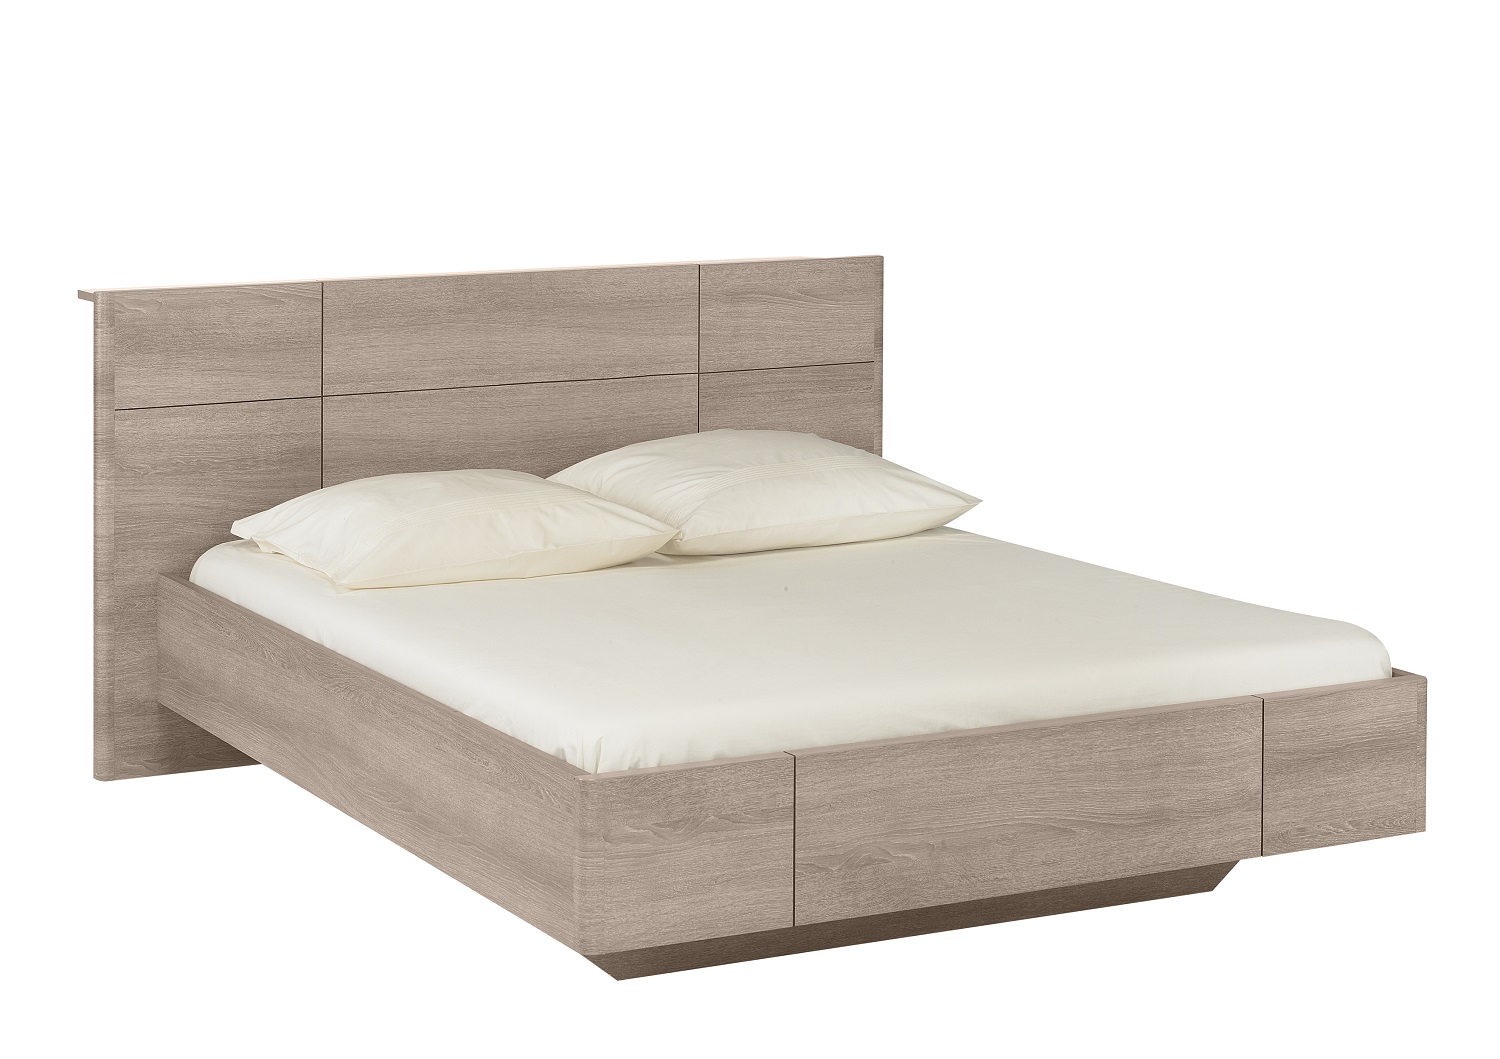 Bilrich Bedroom Furniture - Quadra Storage Queen Bed